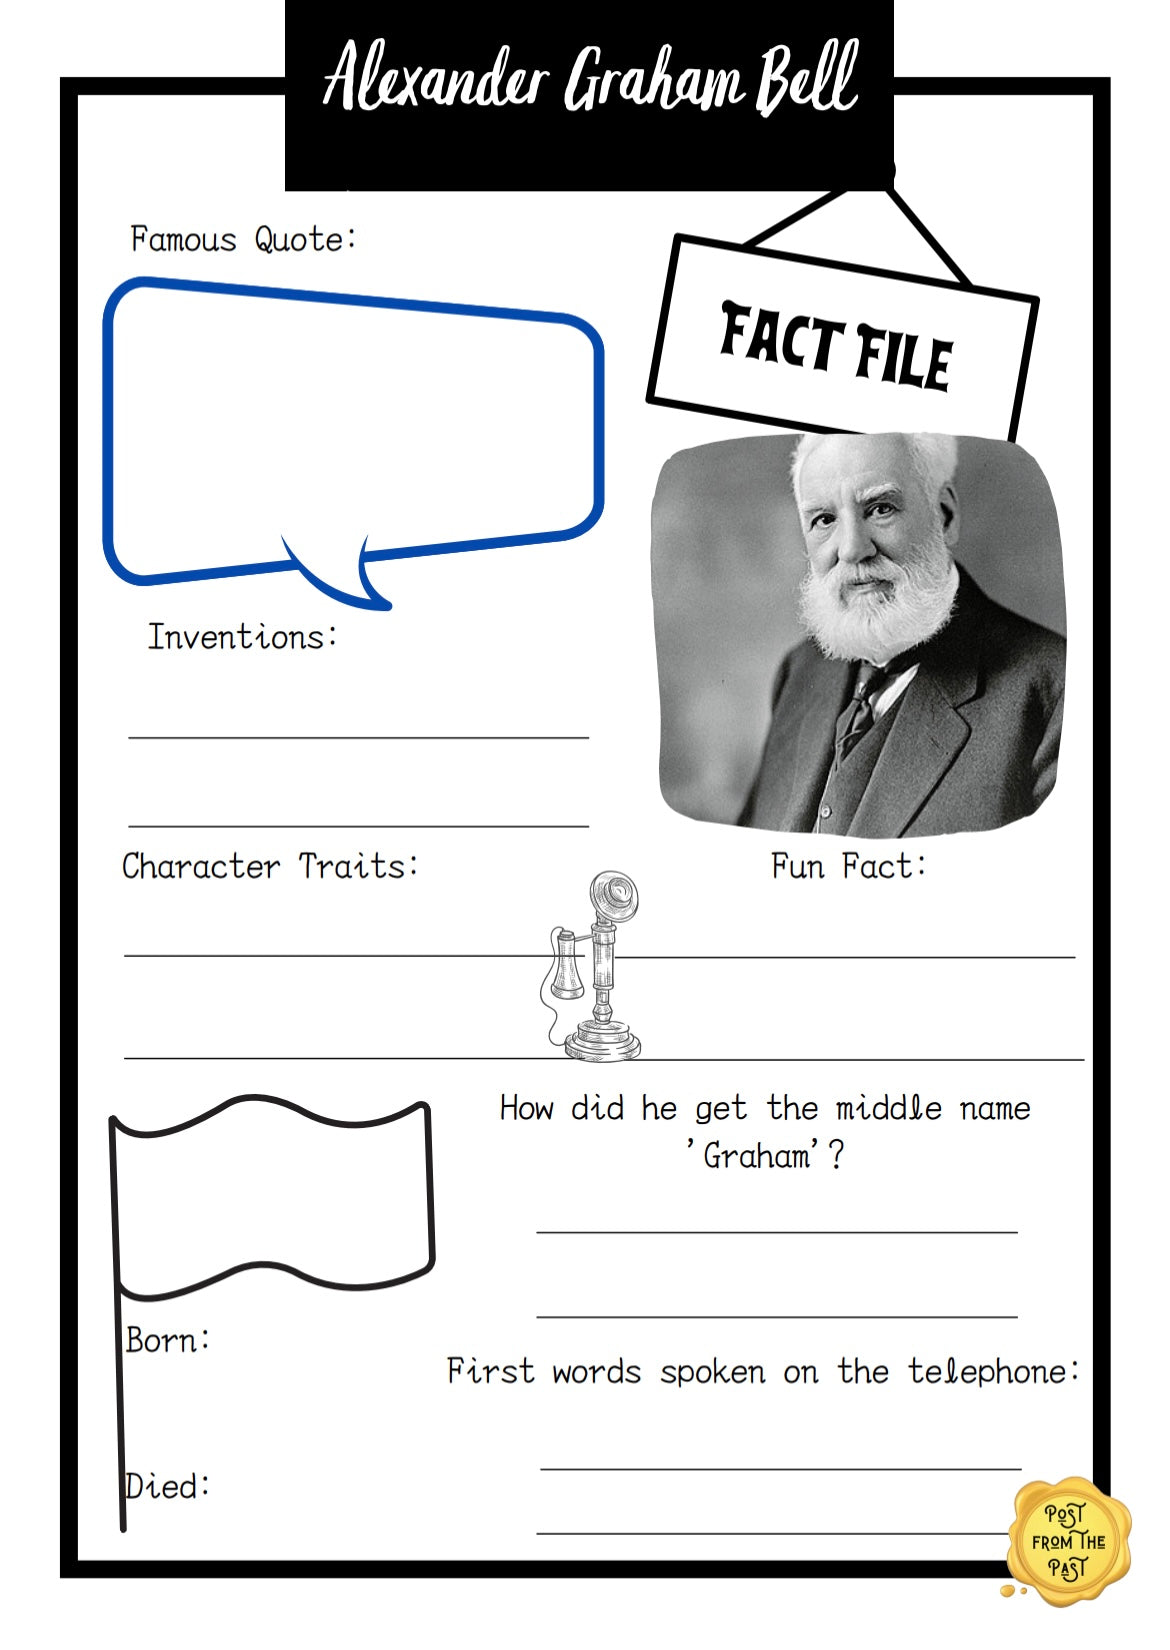 Alexander Graham Bell Letter - Inventor